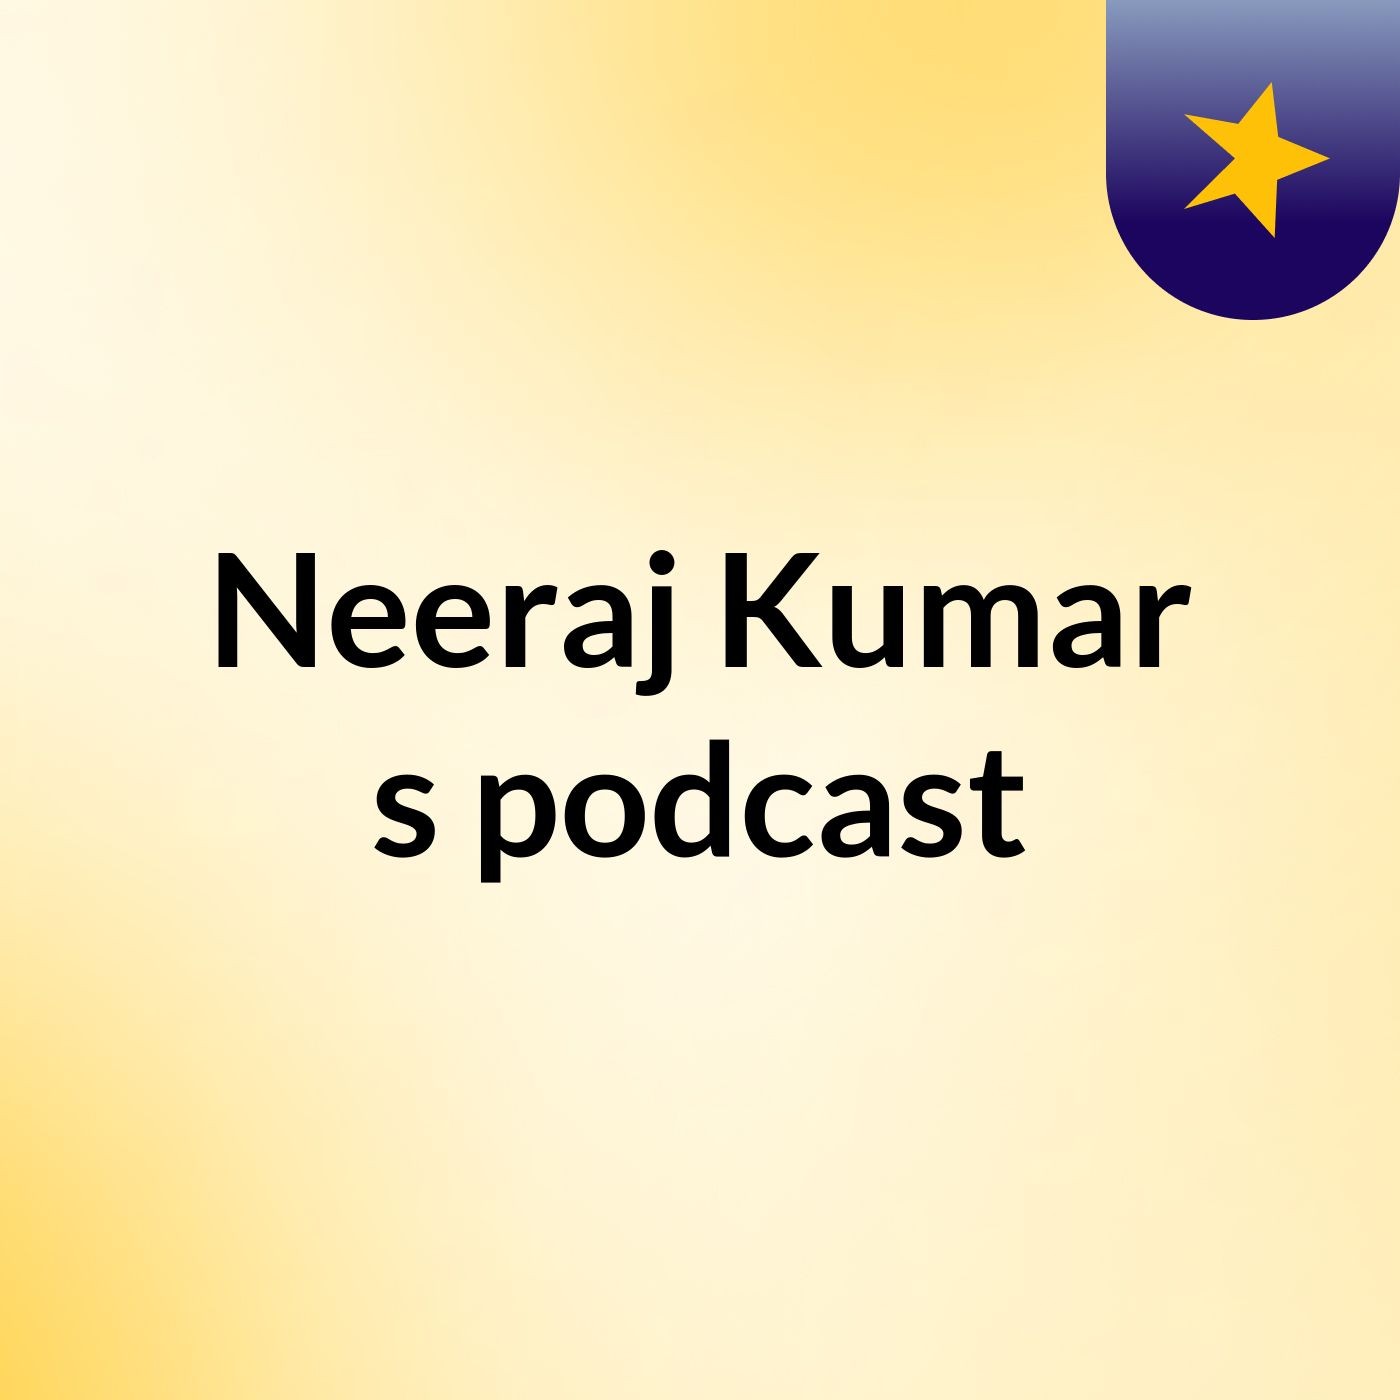 Neeraj Kumar's podcast